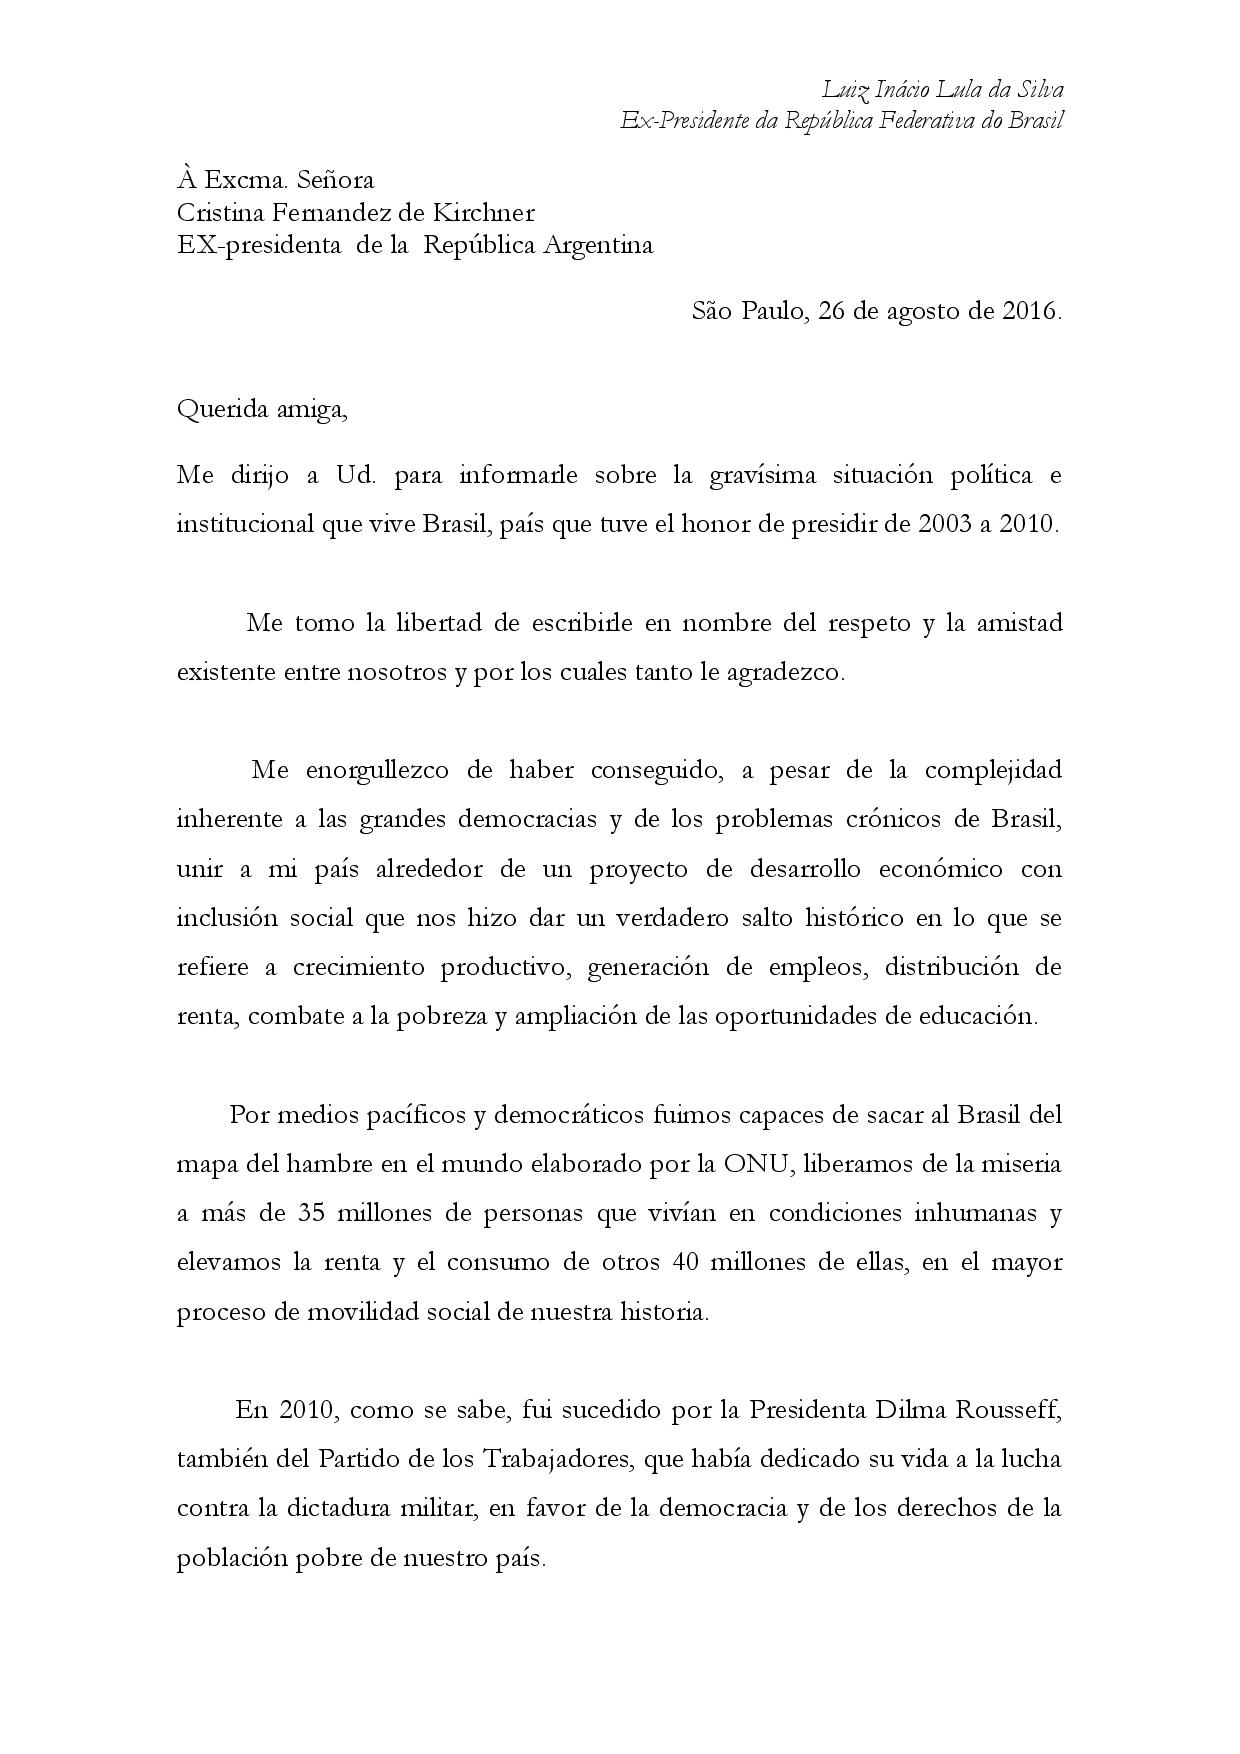 Argentina Ex-presidenta-page-001